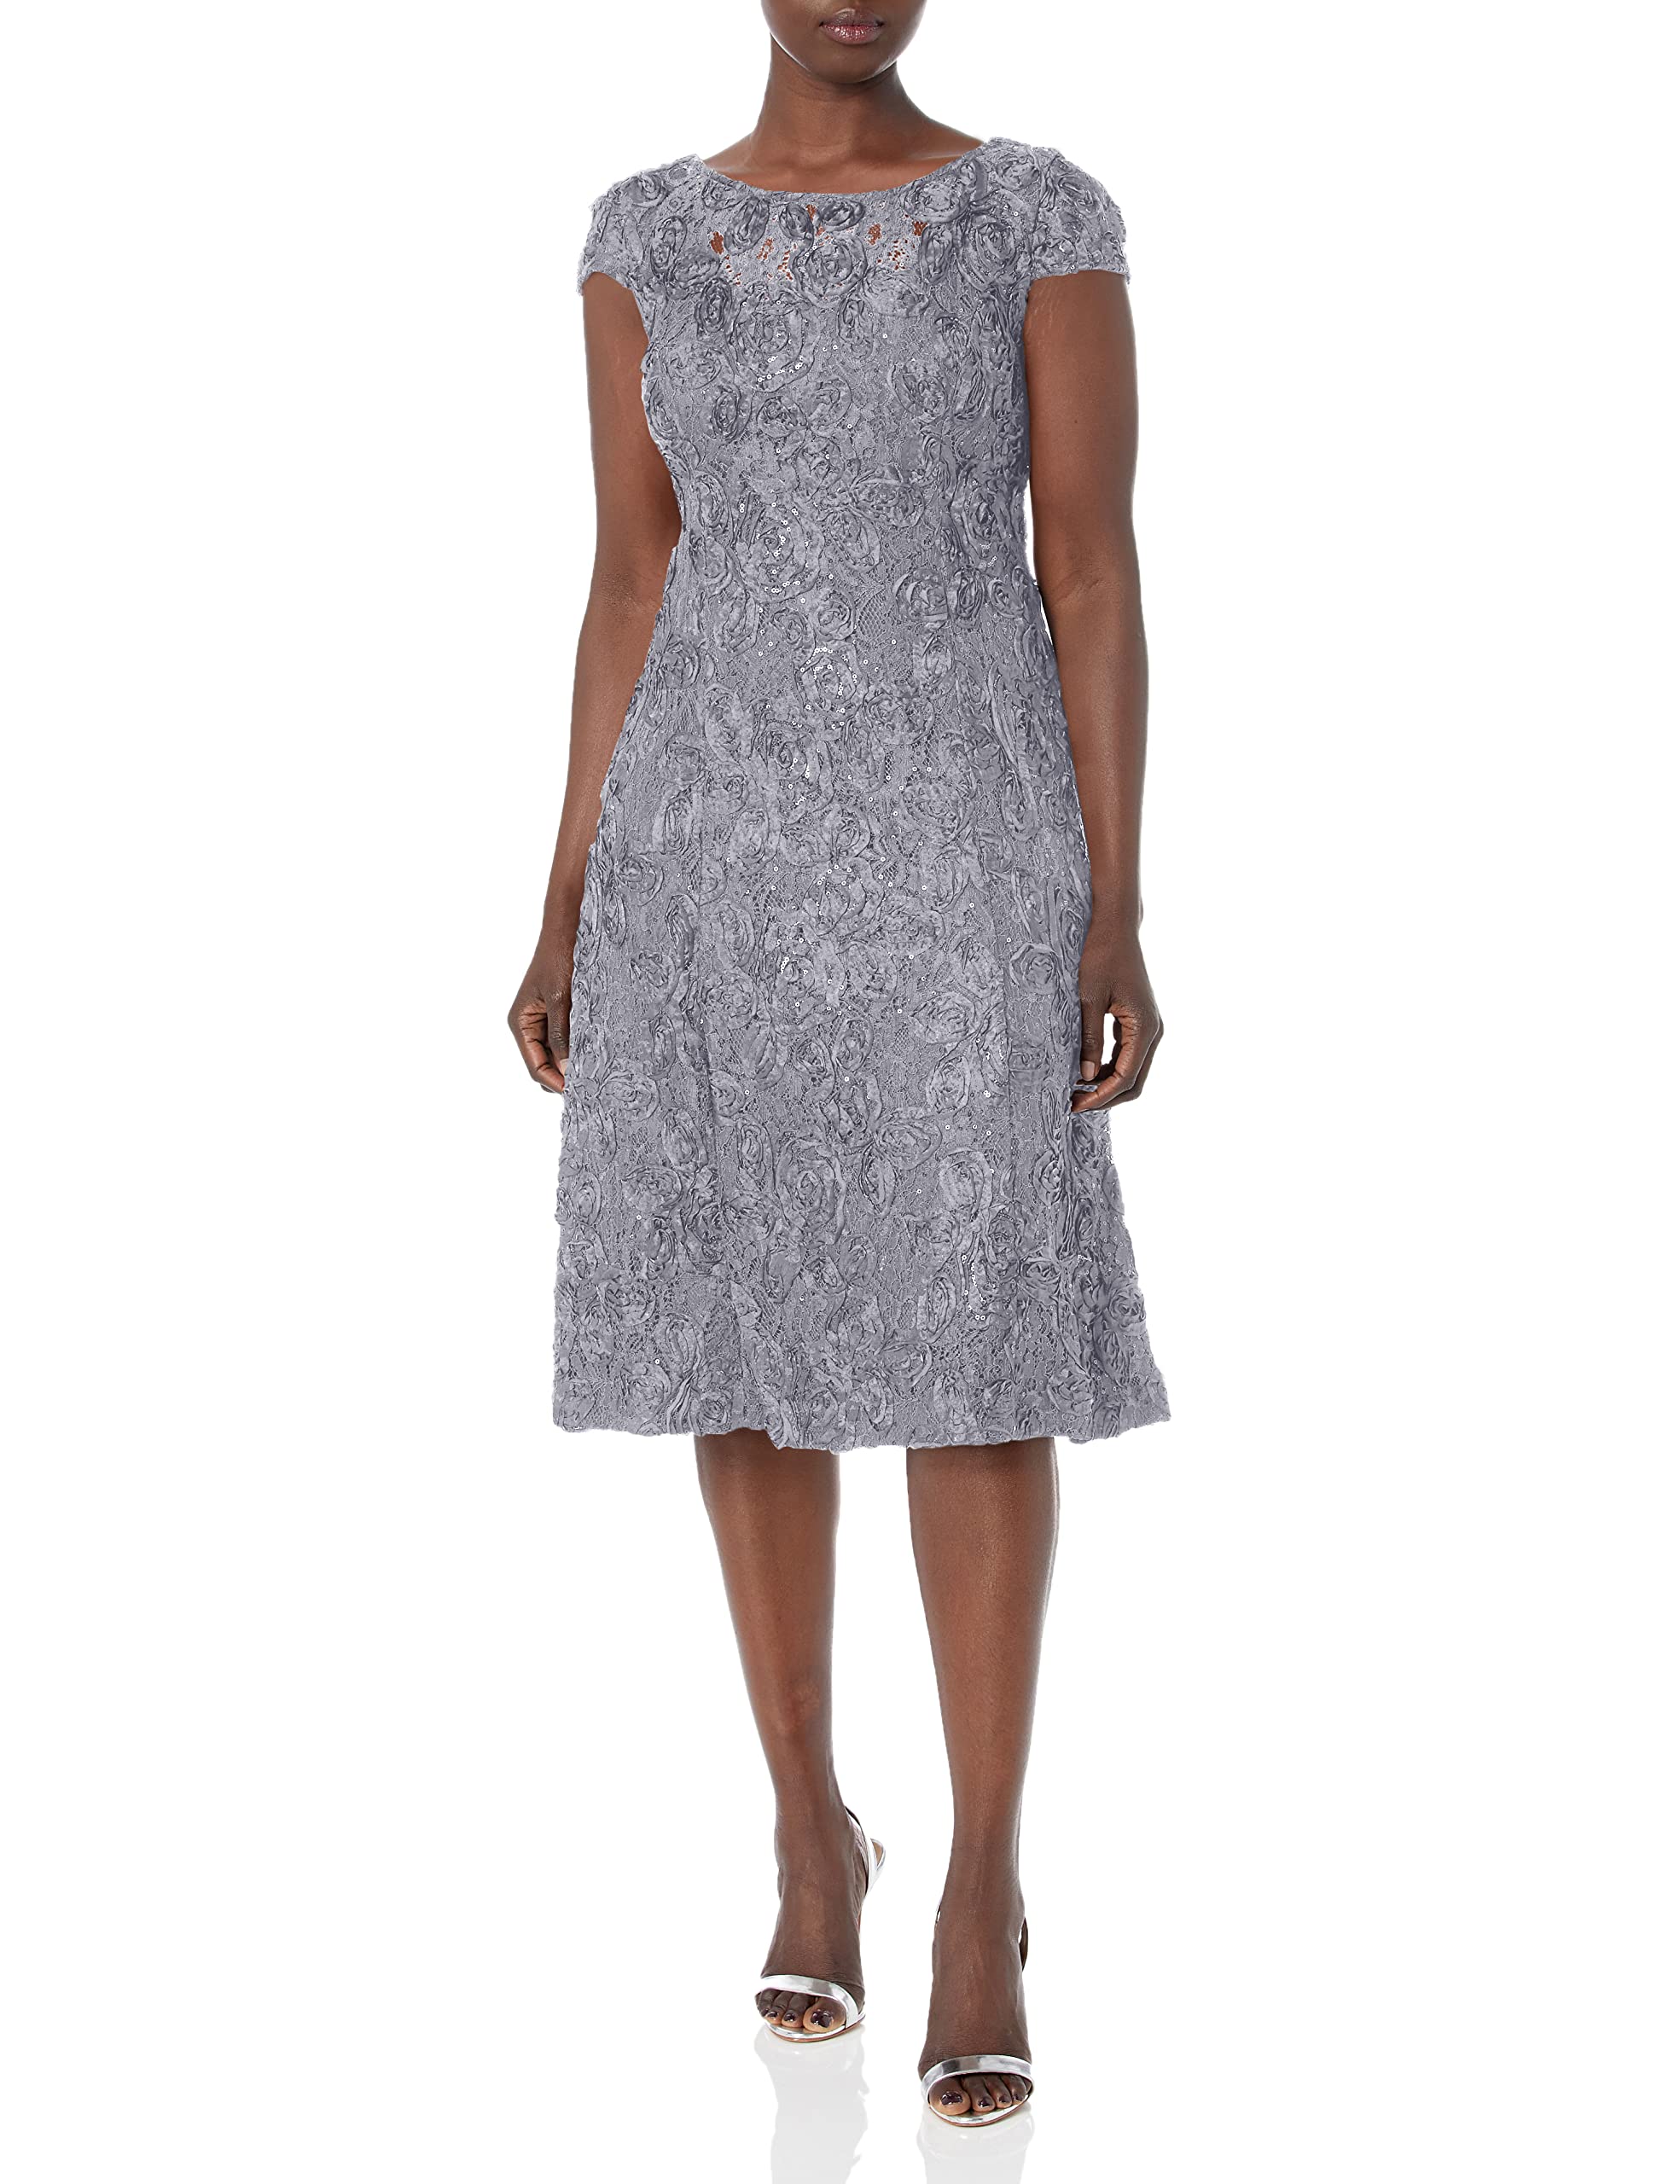 Alex Evenings Women's Tea Length Cap Sleeve Rosette Dress (Petite and Regular)